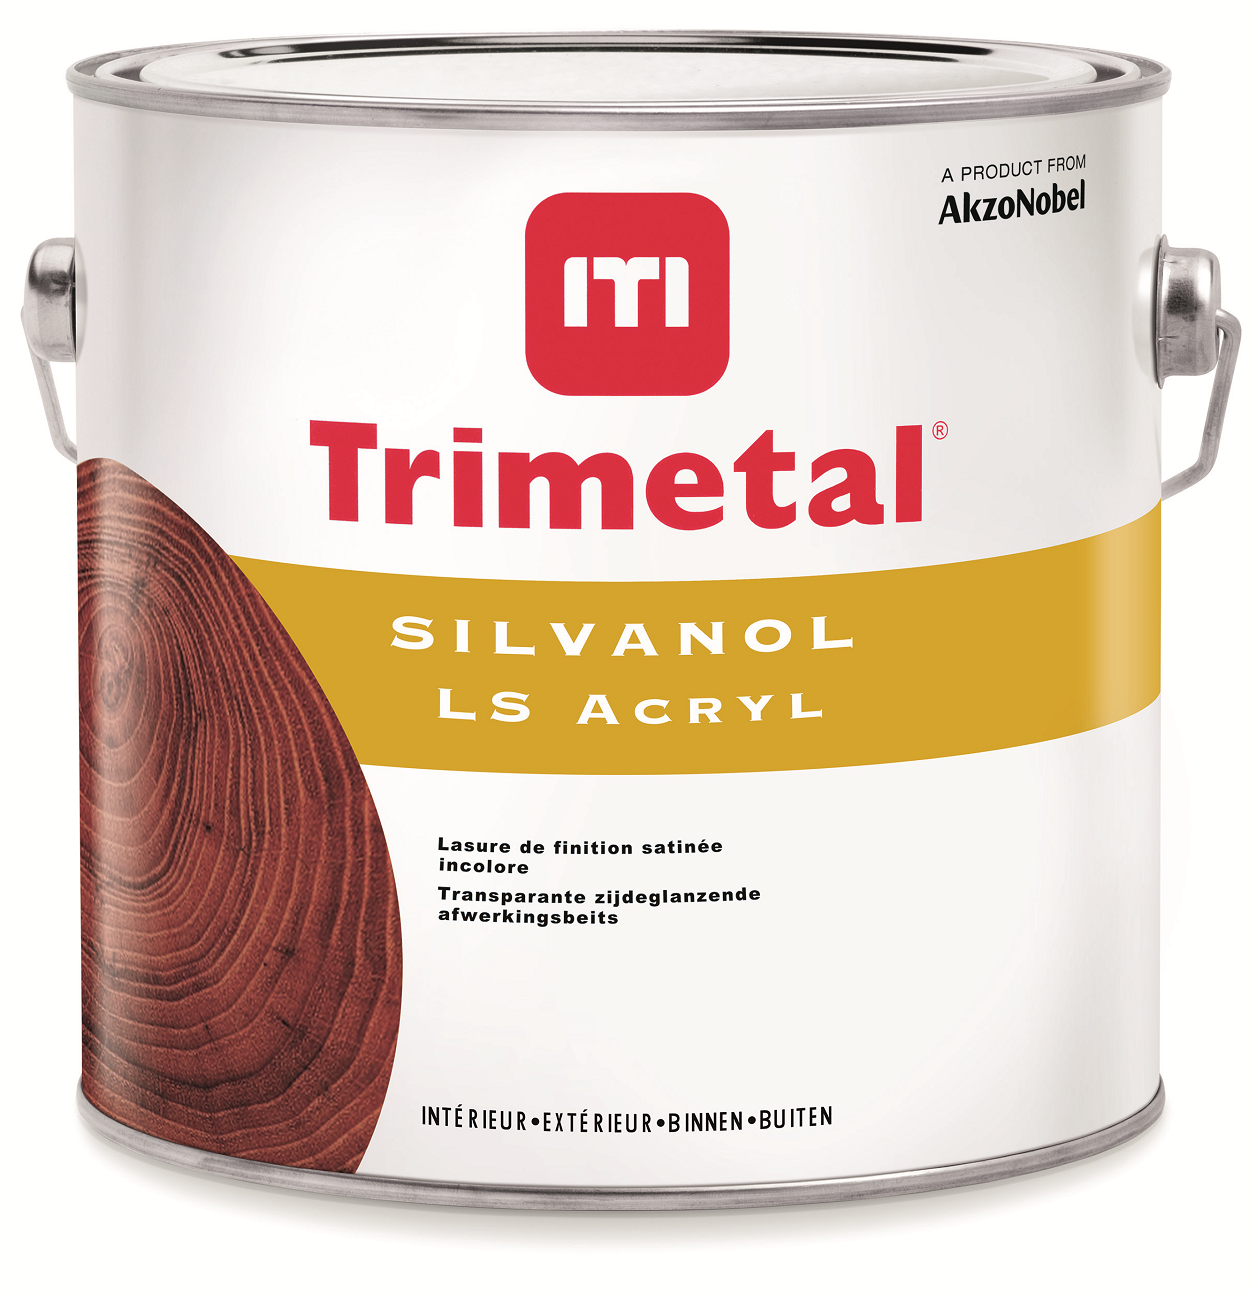 trimetal silvanol ls acryl kleur 2.5 ltr